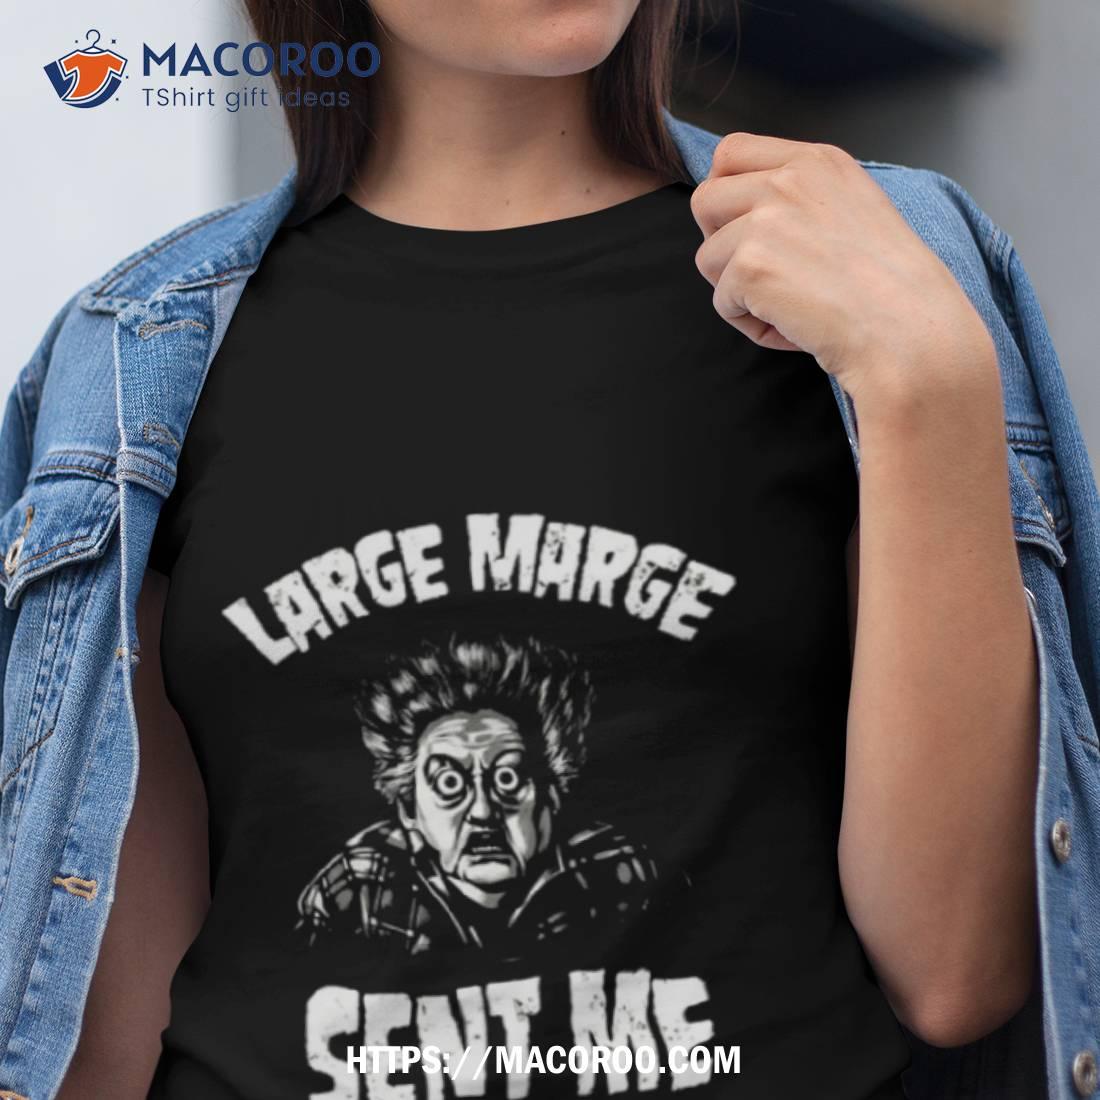 Pee Wee Herman Dent Me Large Marge Shirt Tshirt